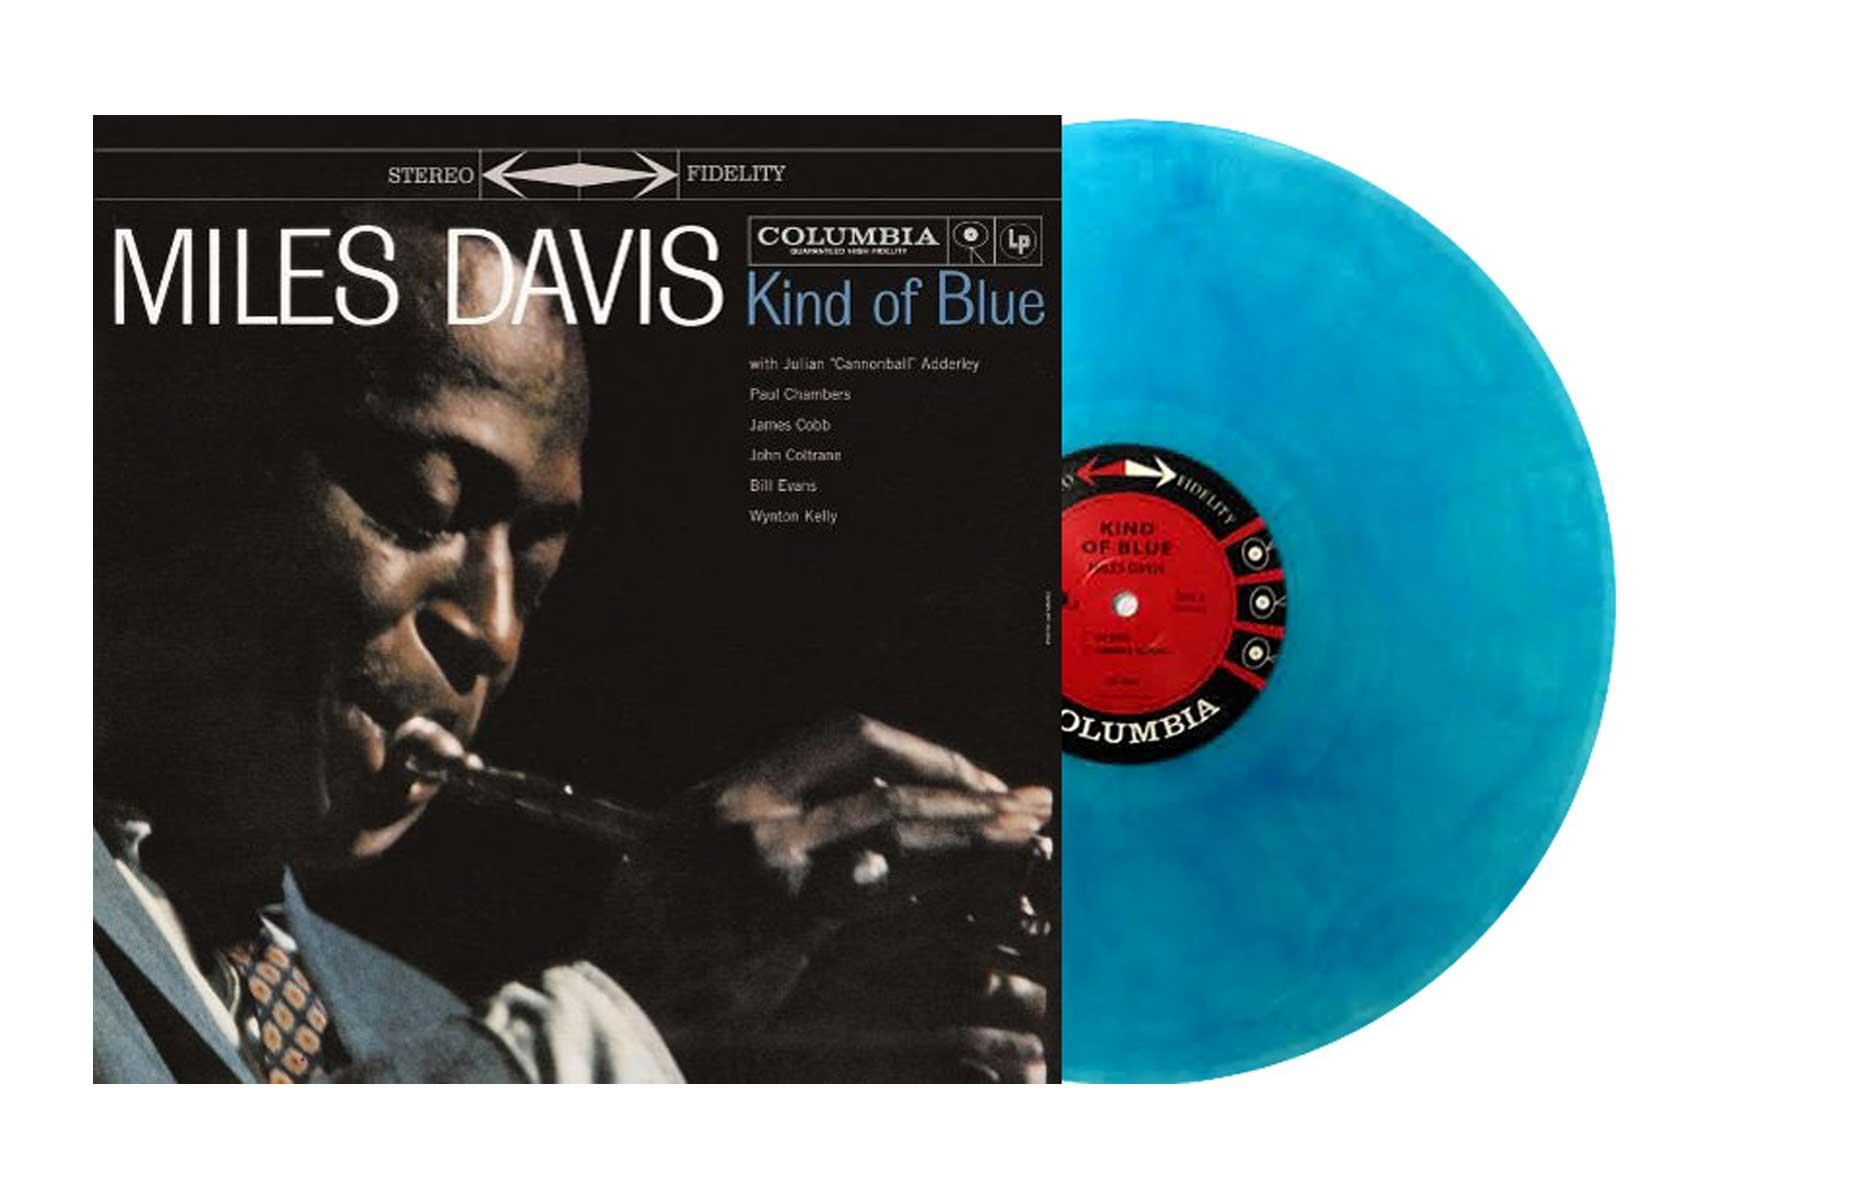 Blue miles. Kind of Blue Майлз Дэвис. Miles Davis - kind of Blue (1959). Miles Davis - kind of Blue (Full album) 1959. Kind of Blue Майлз Дэвис джазовые альбомы.